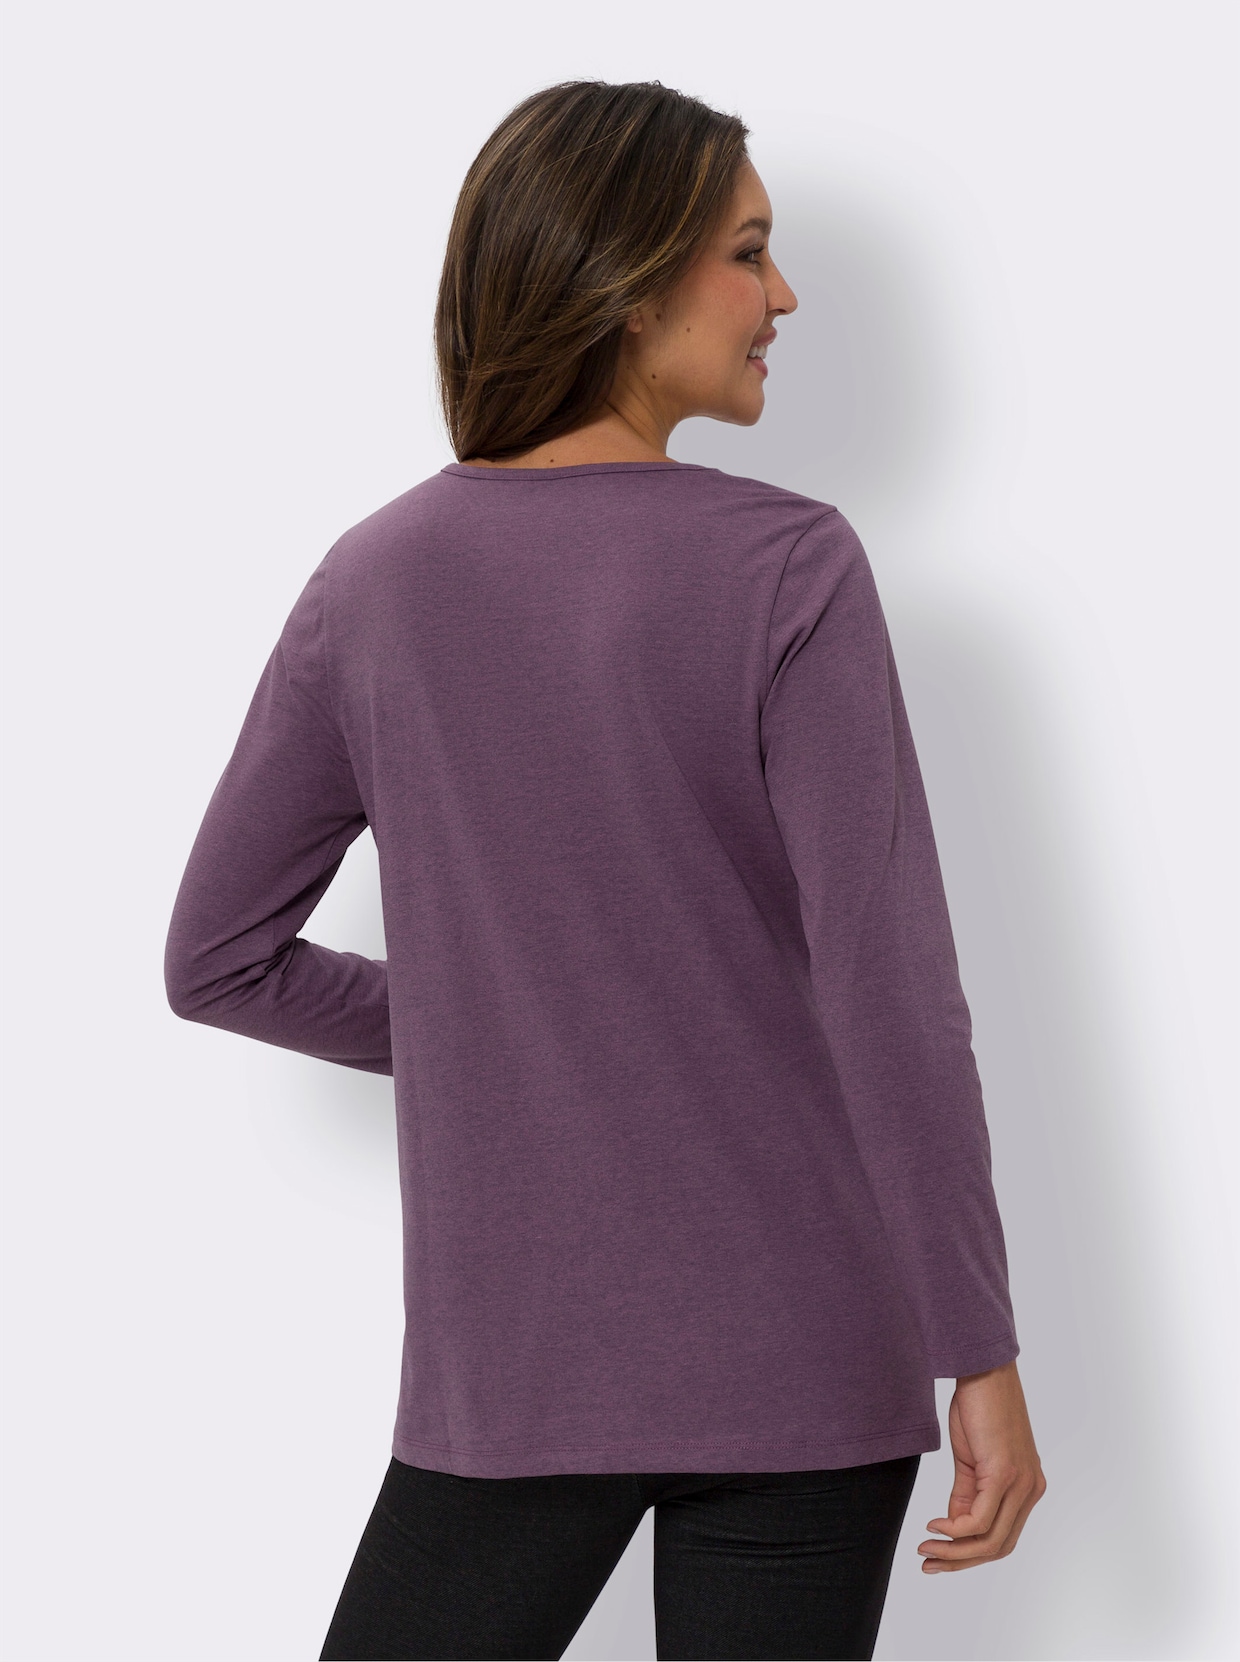 Dlhé tričko - fialová melírovaná